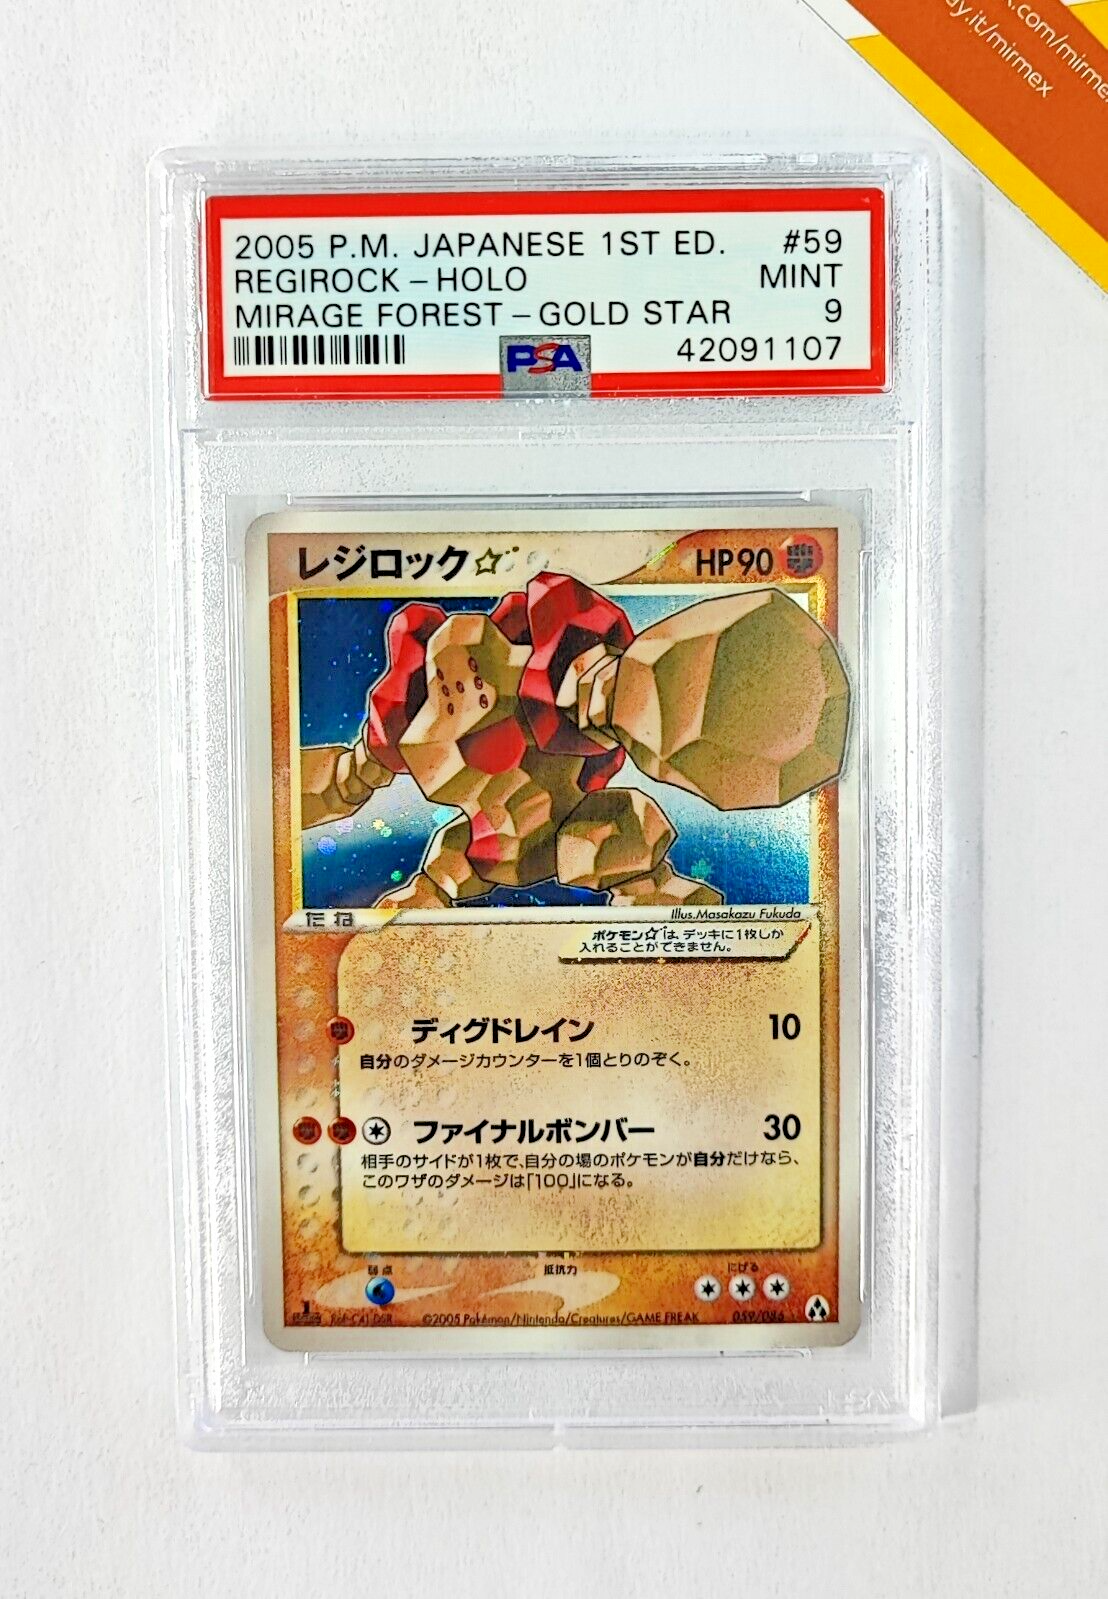 Pokemon PSA 9 Regirock Gold Star 059 Holo 1st Ed Mirage Forest 2005 Japanese